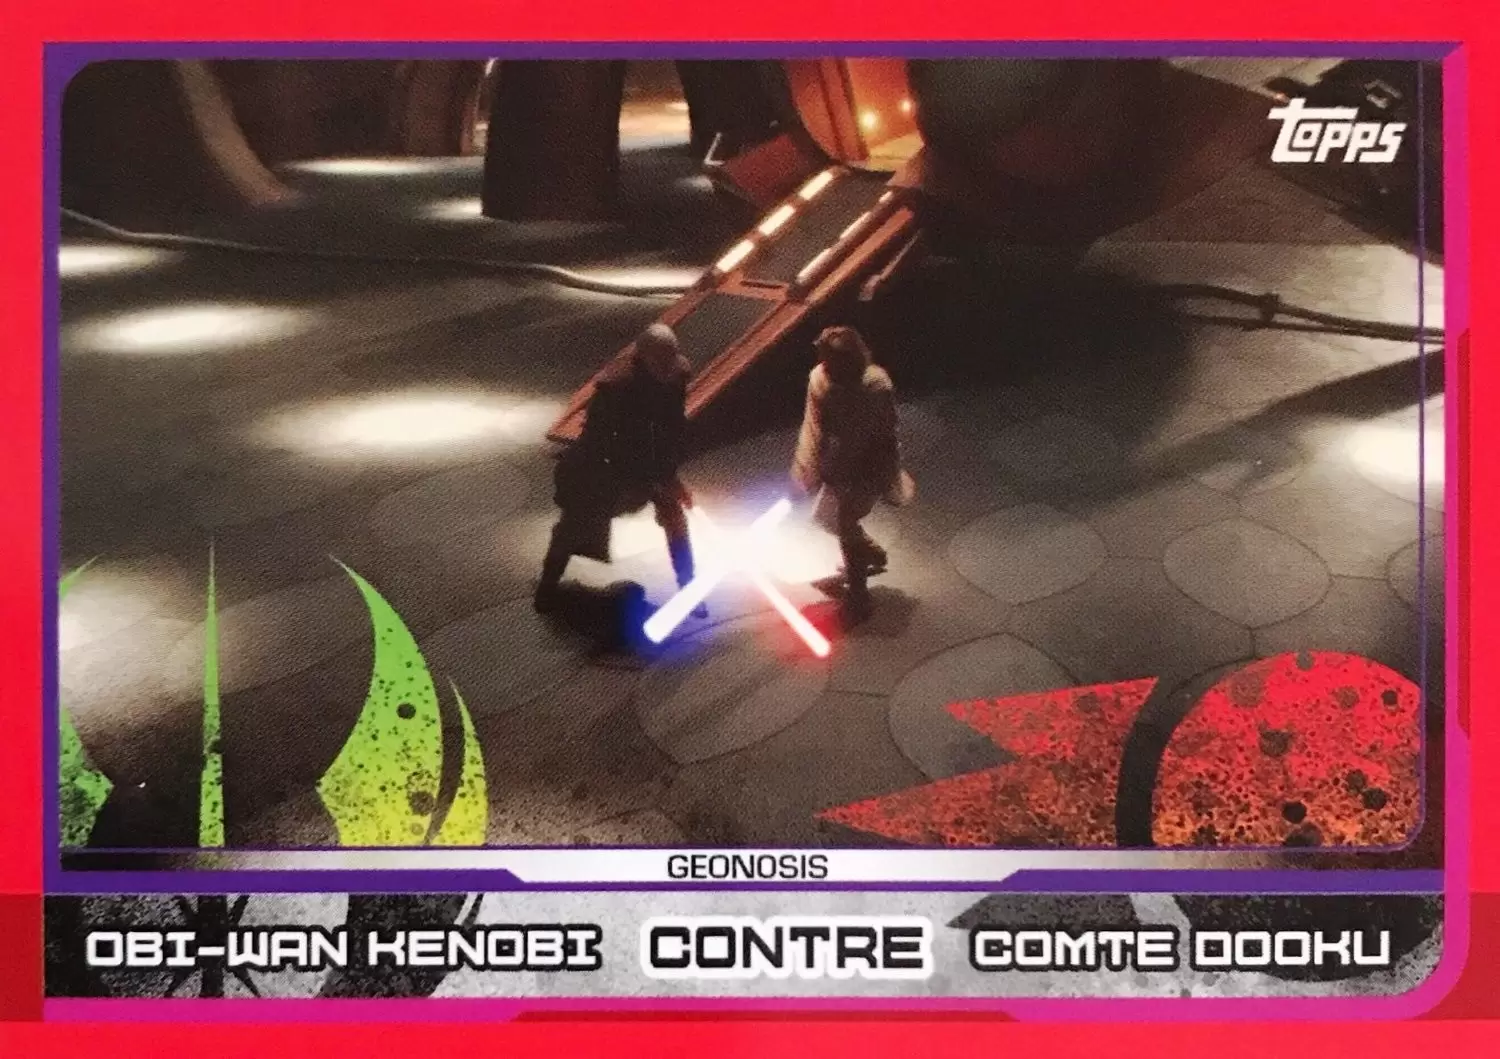 Topps - Voyage vers Star wars : Les Derniers Jedi - Obi-Wan Kenobi contre Comte Dooku (Geonosis)